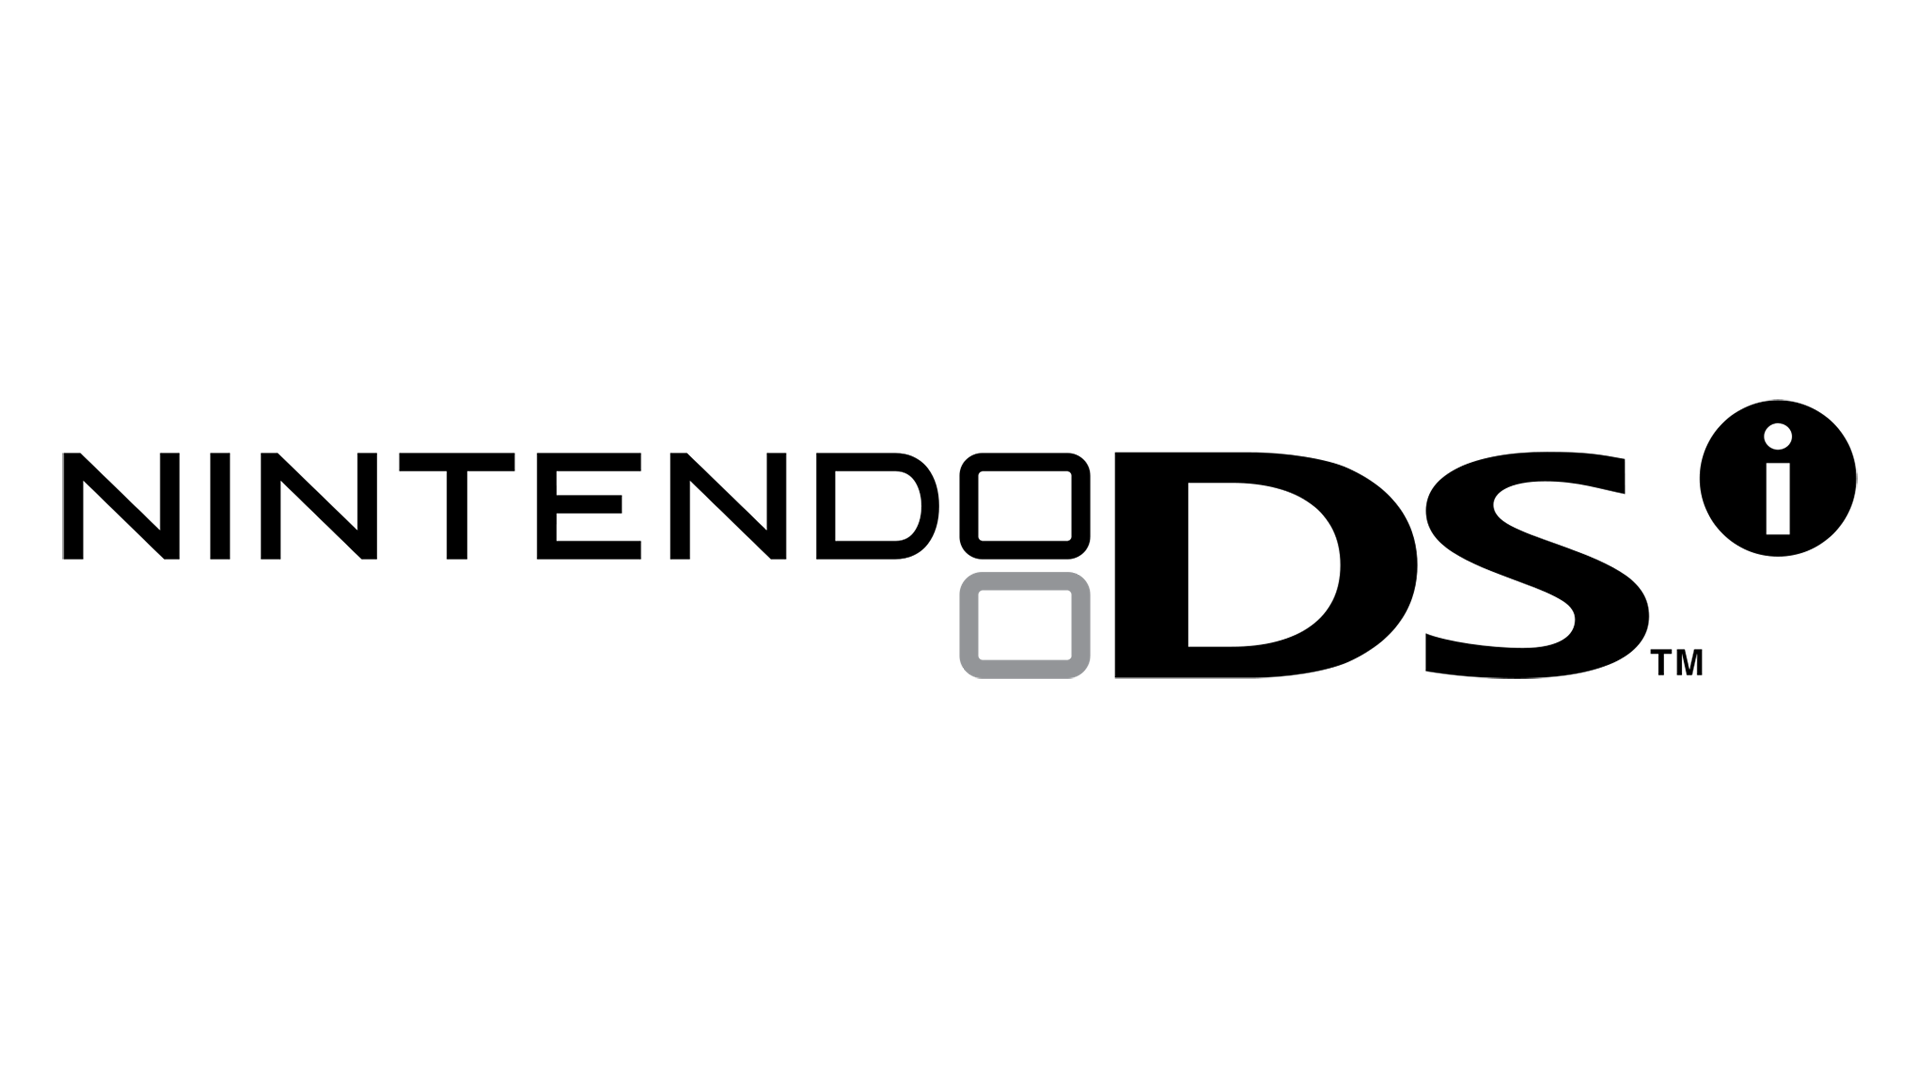 Nintendo DSi System Logo